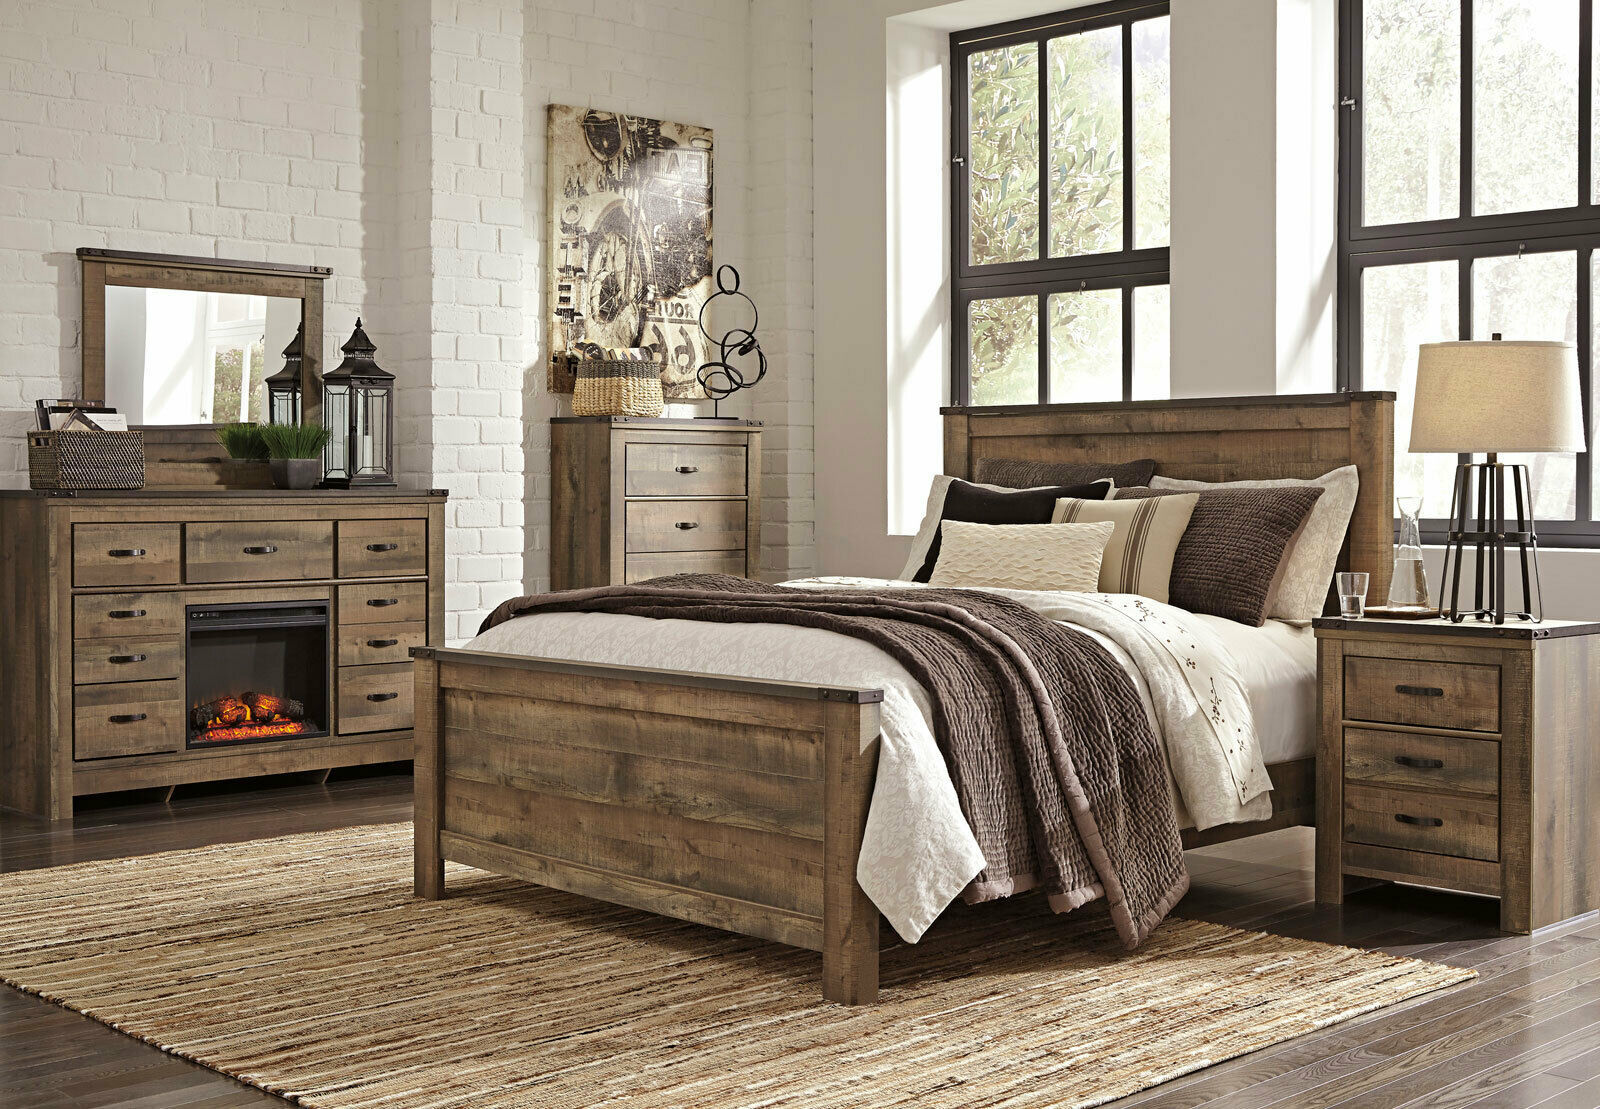 Modern Rustic Brown w. Fireplace Bedroom Furniture - 5pcs King Size Bed Set IA2F - Bedroom Sets